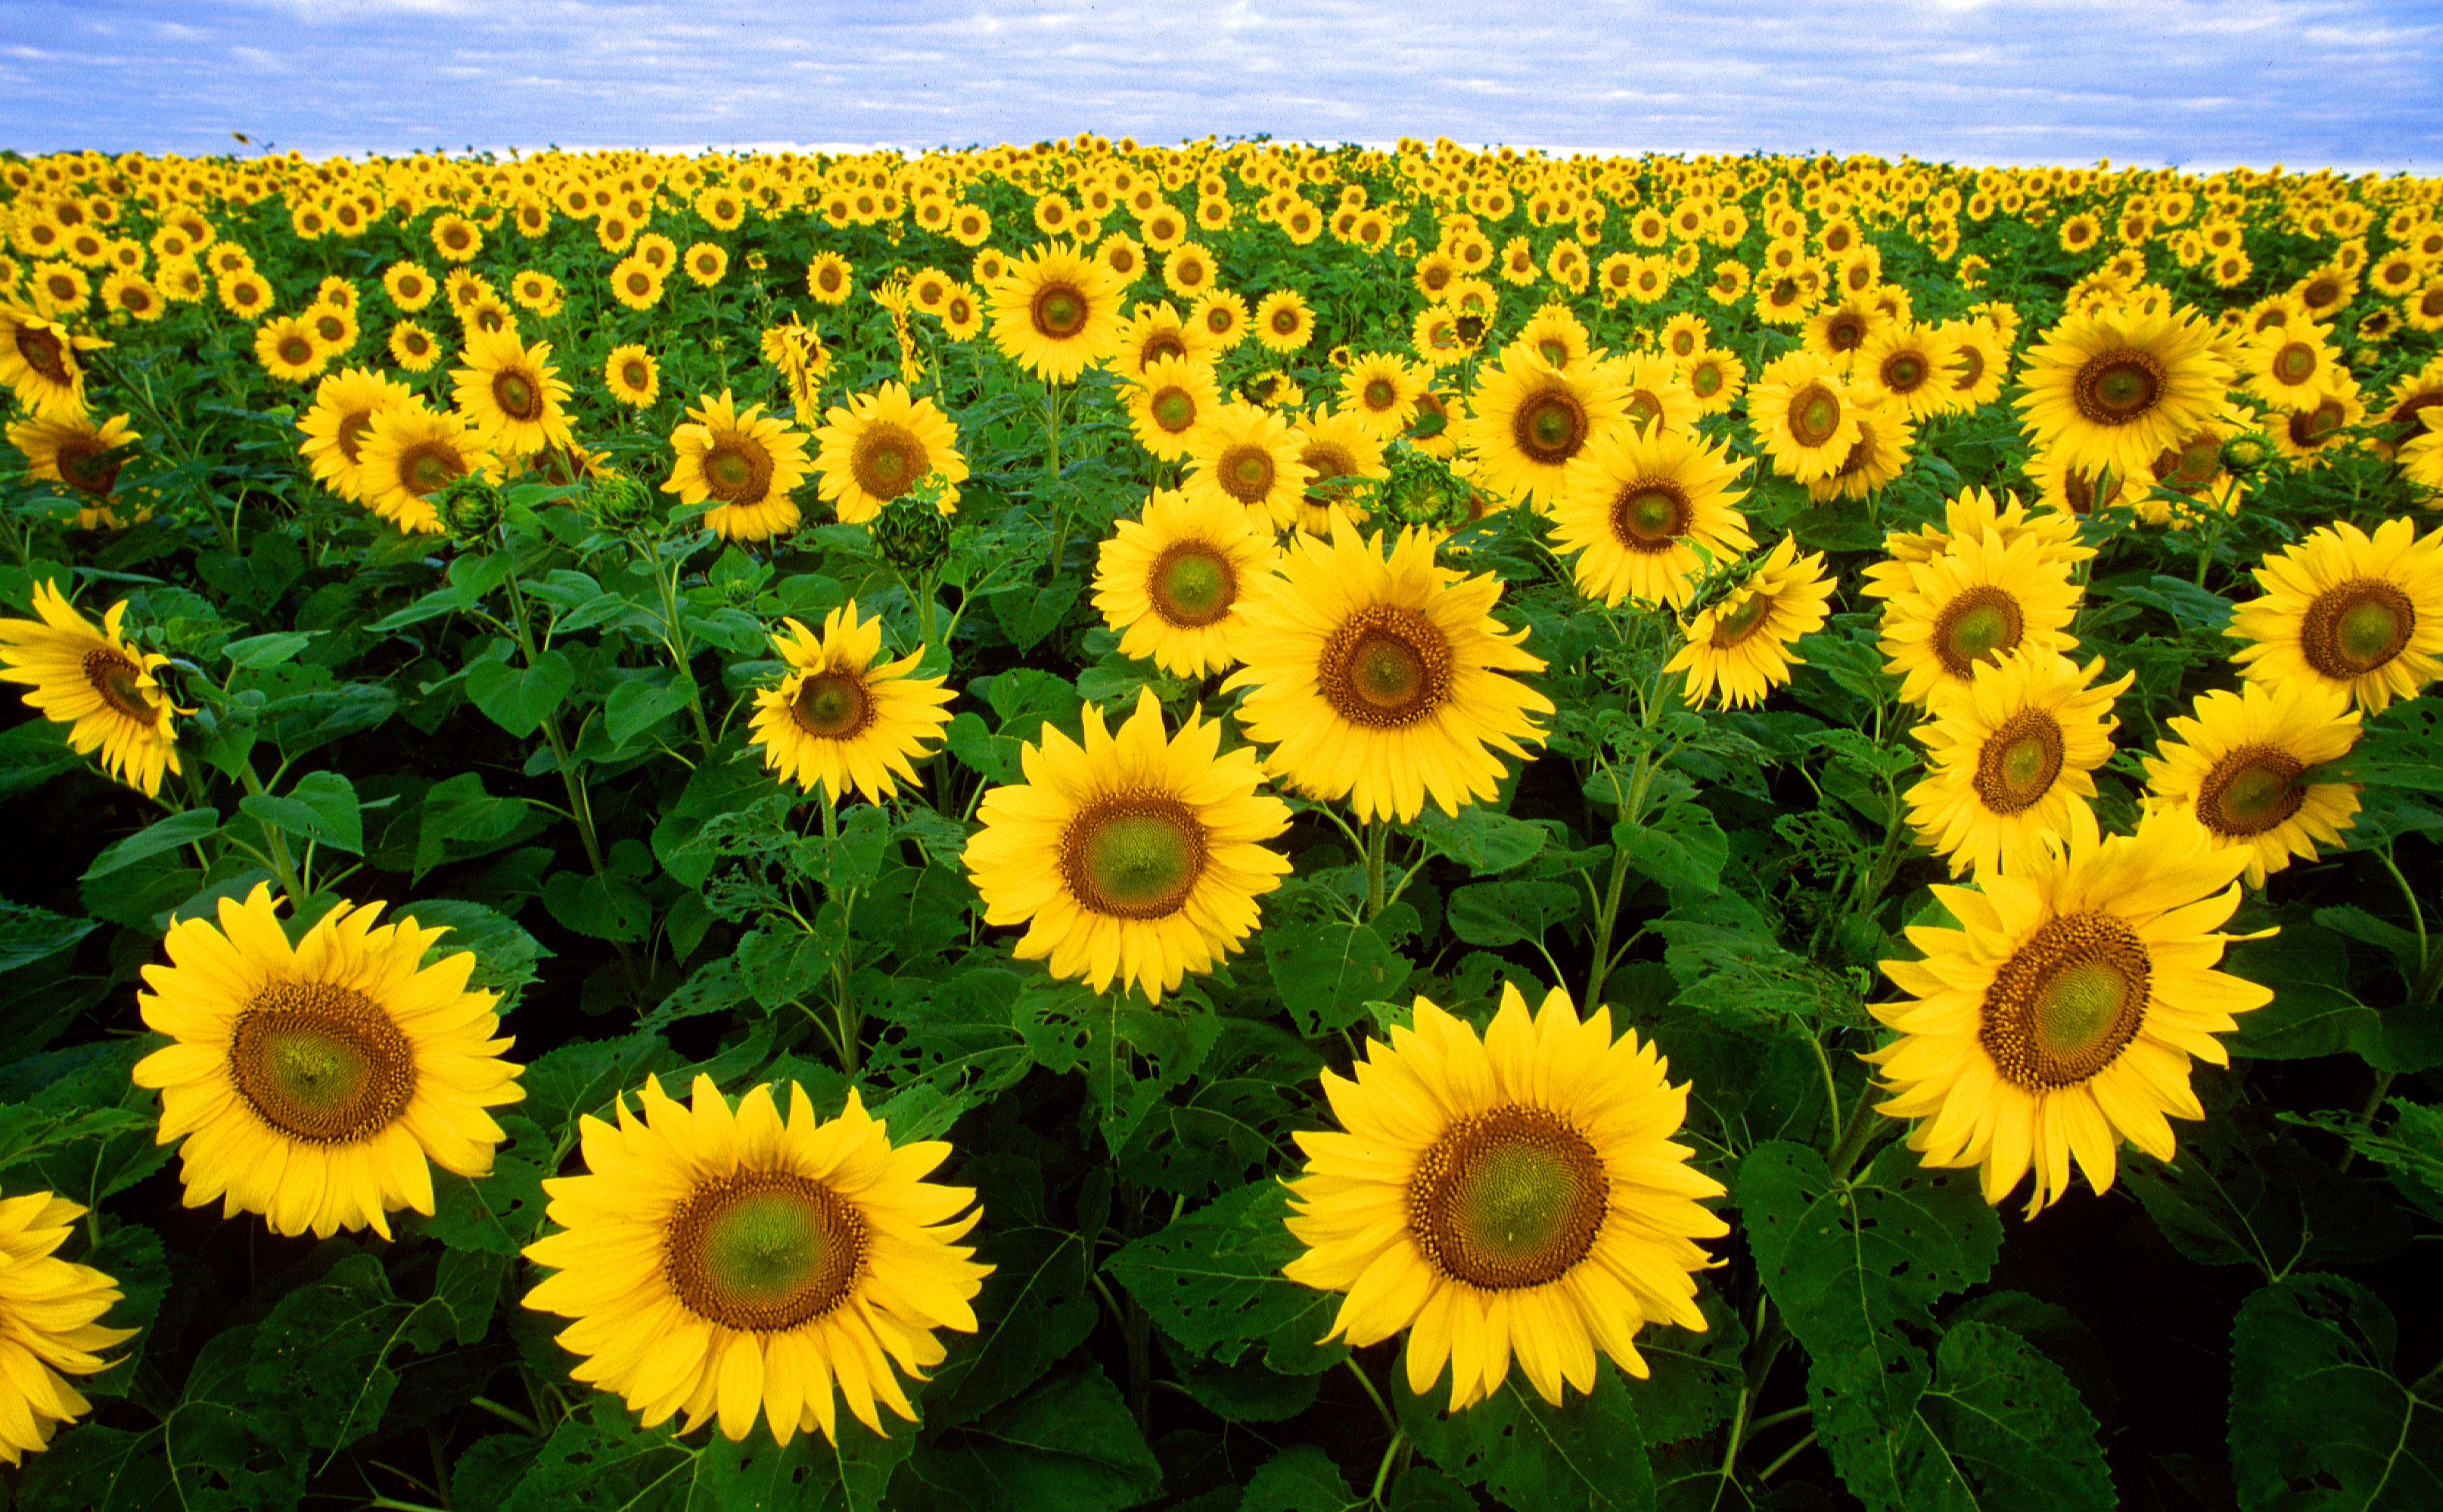 ../../../_images/sunflowers.jpg